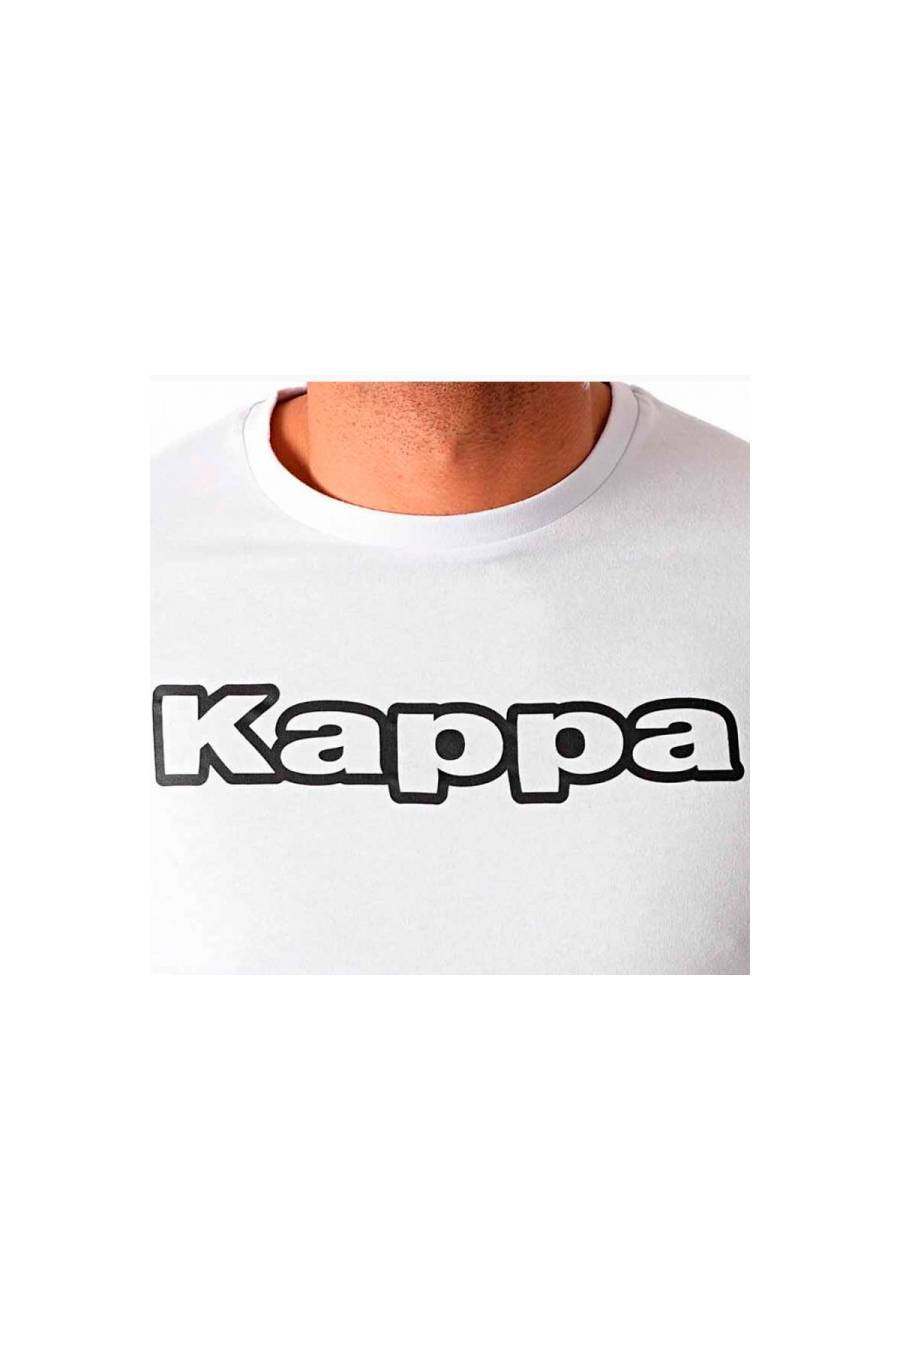 camiseta-kappa-kouk-31175UW_A05-masdeporte